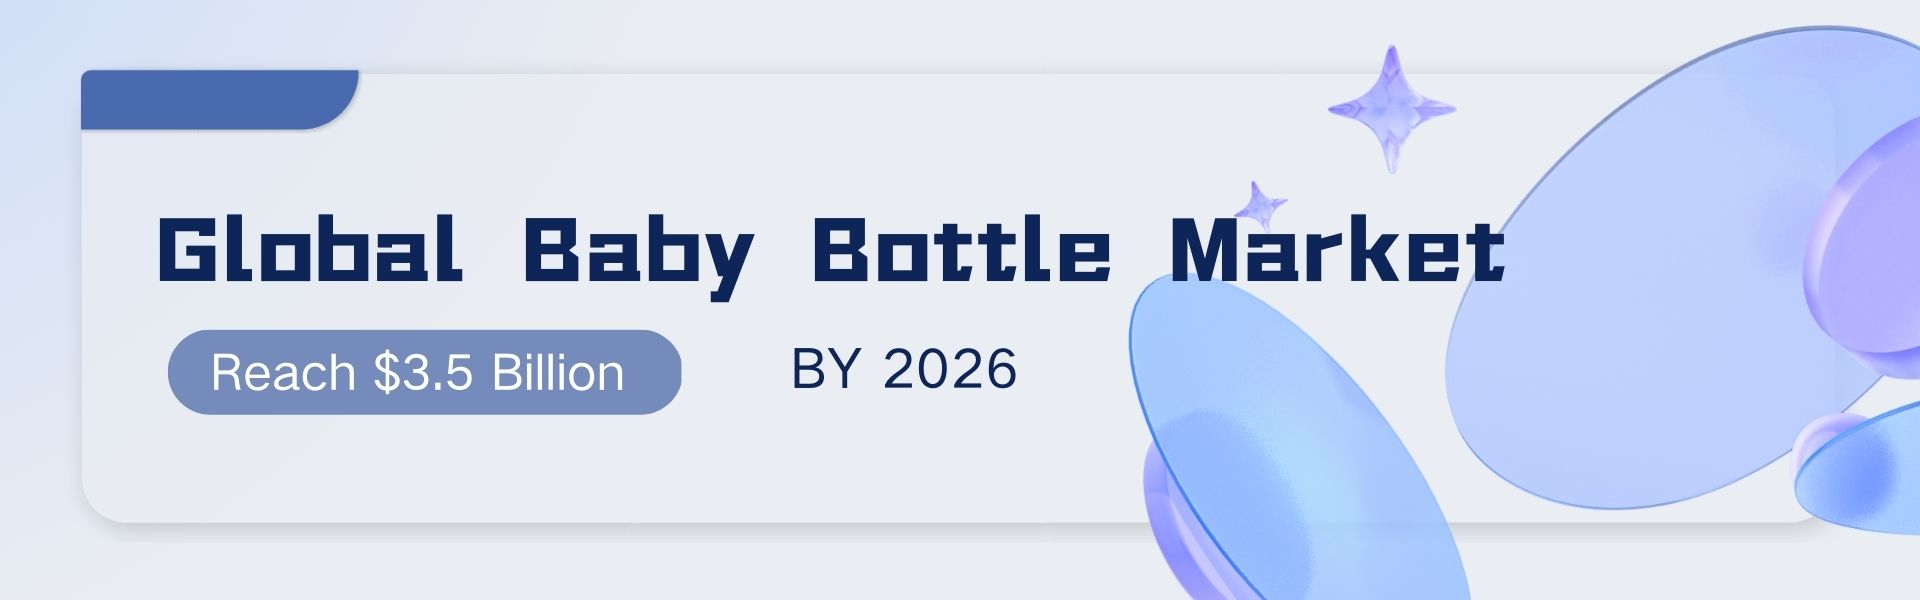 Global Baby Bottle Market to Reach $3.5 Billion by 2026